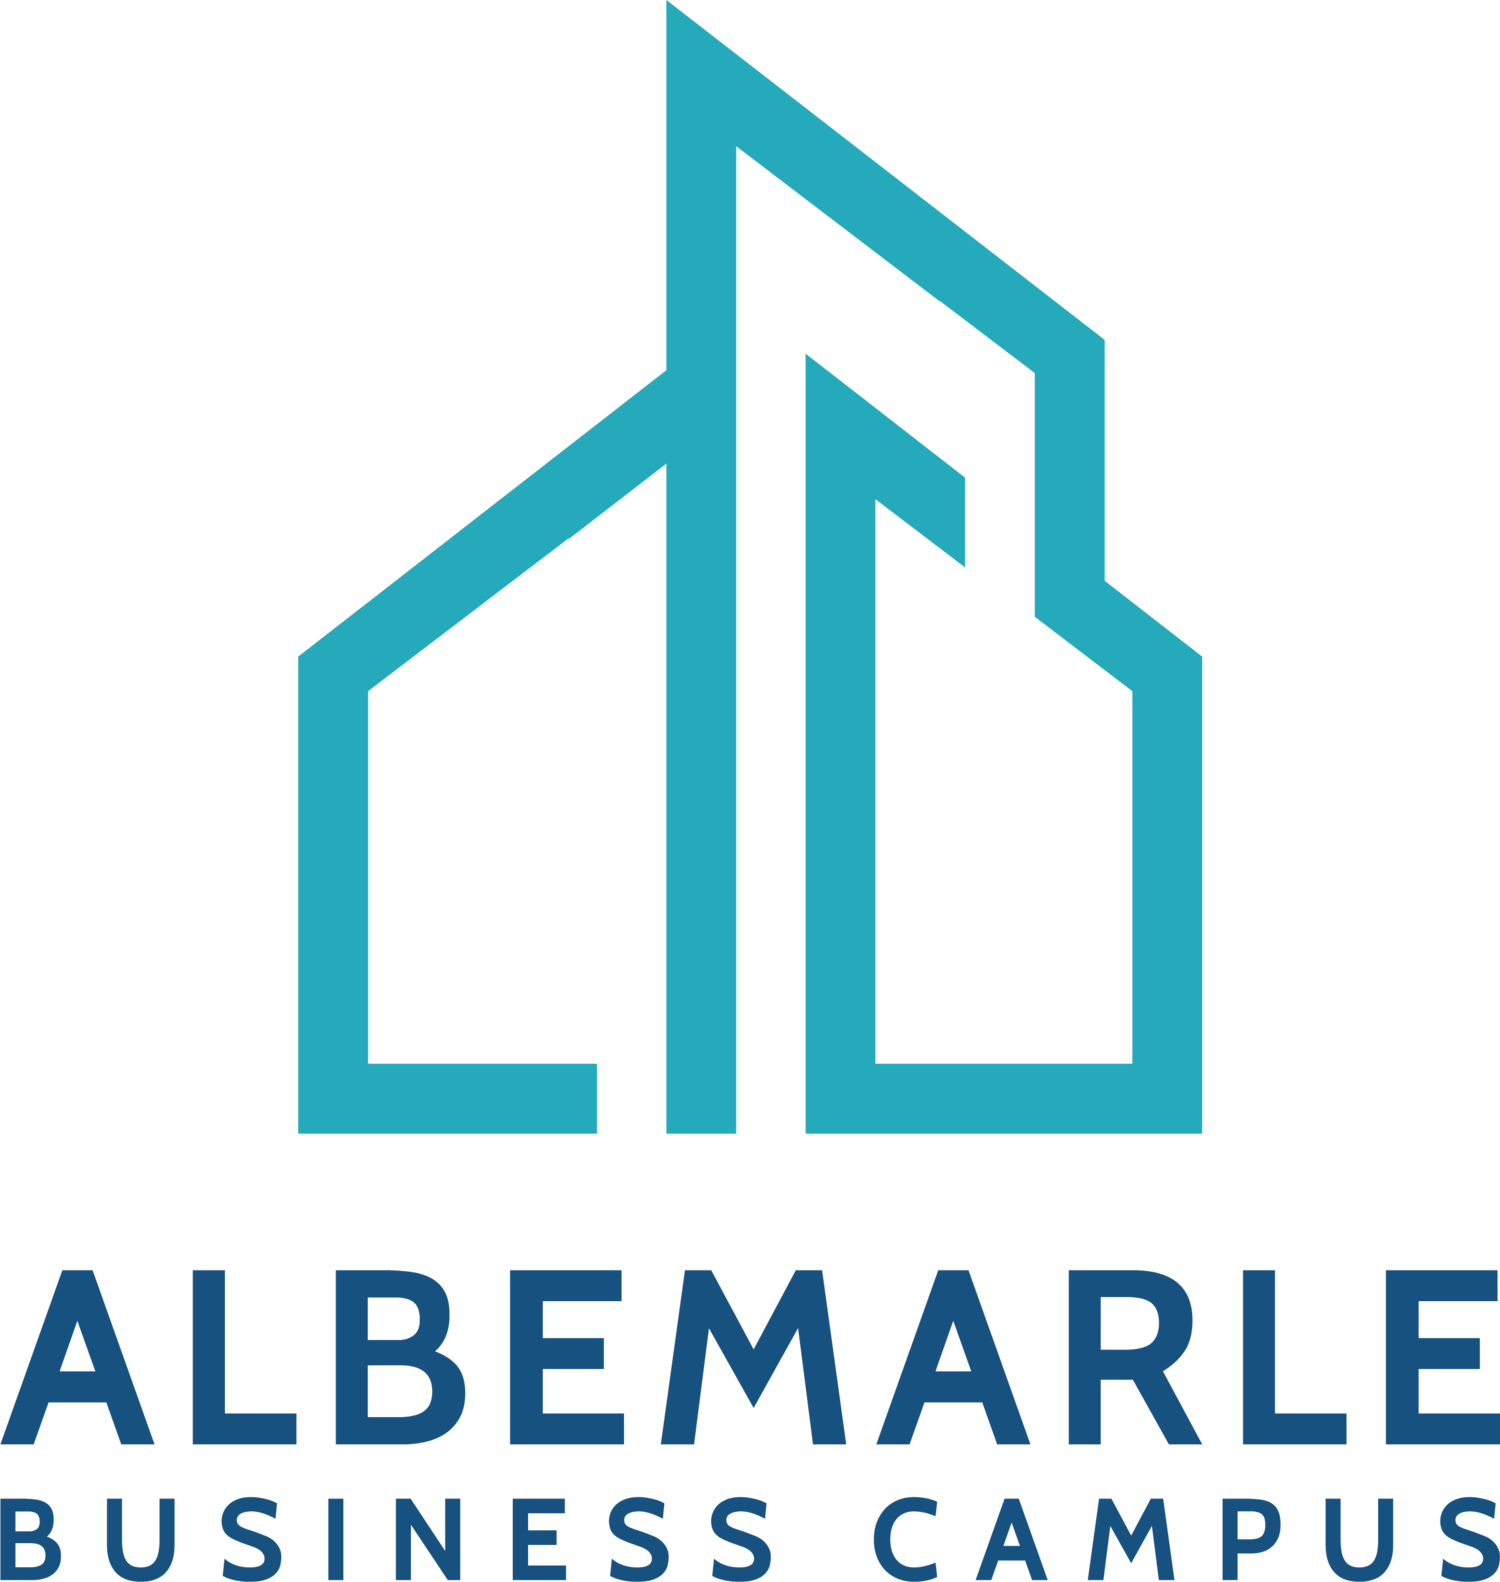 Albemarle Business Campus